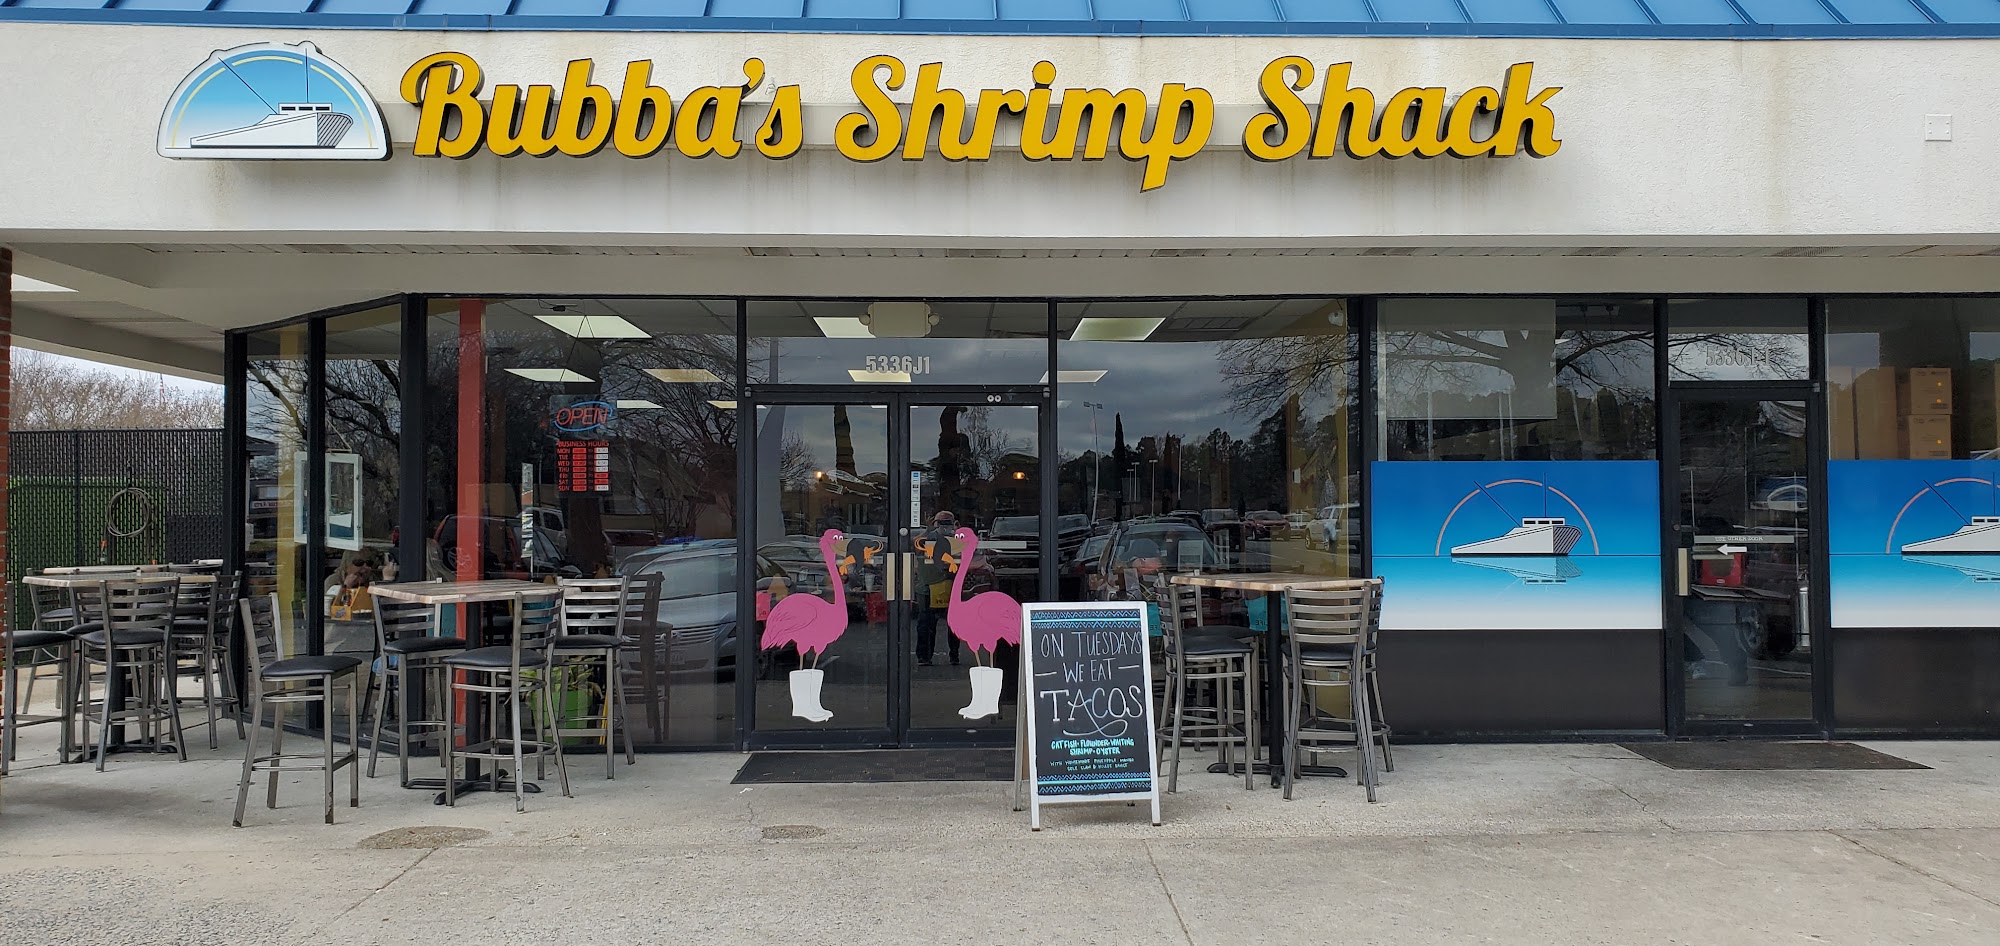 Bubba's Shrimp Shack Grafton